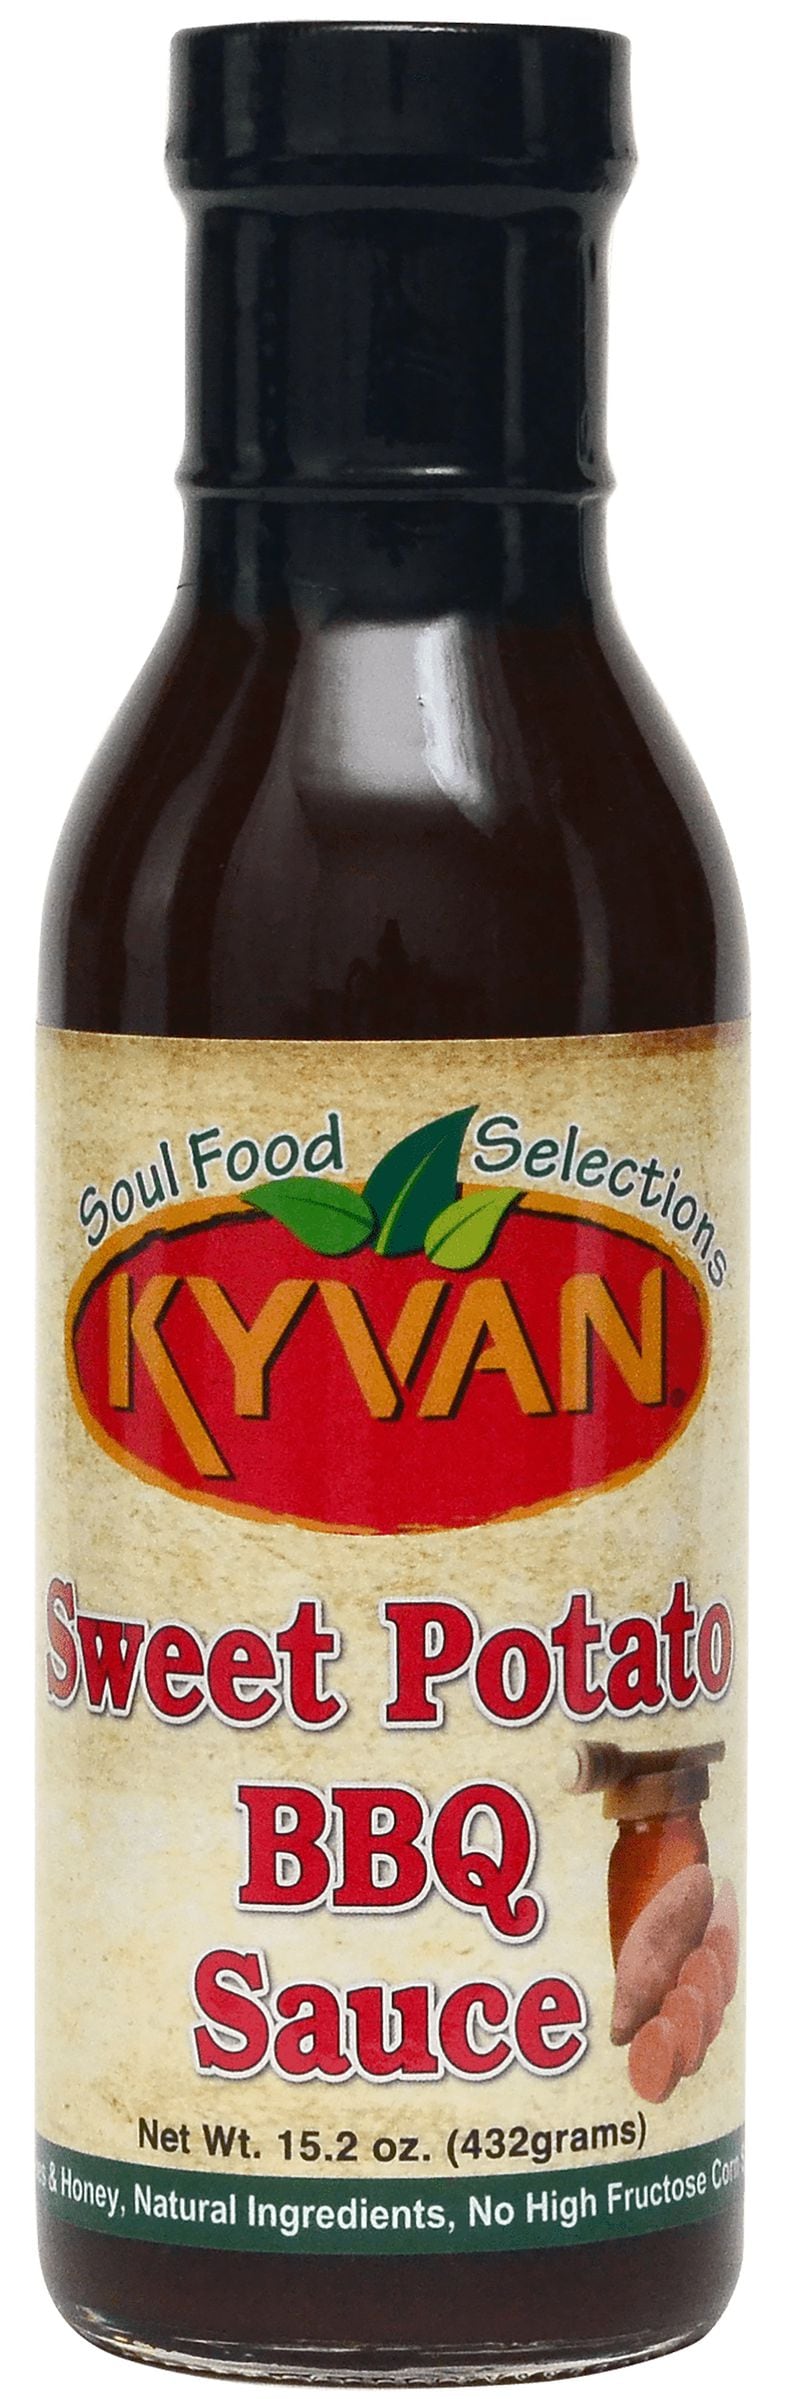 Sweet Potato BBQ Sauce from Kyvan